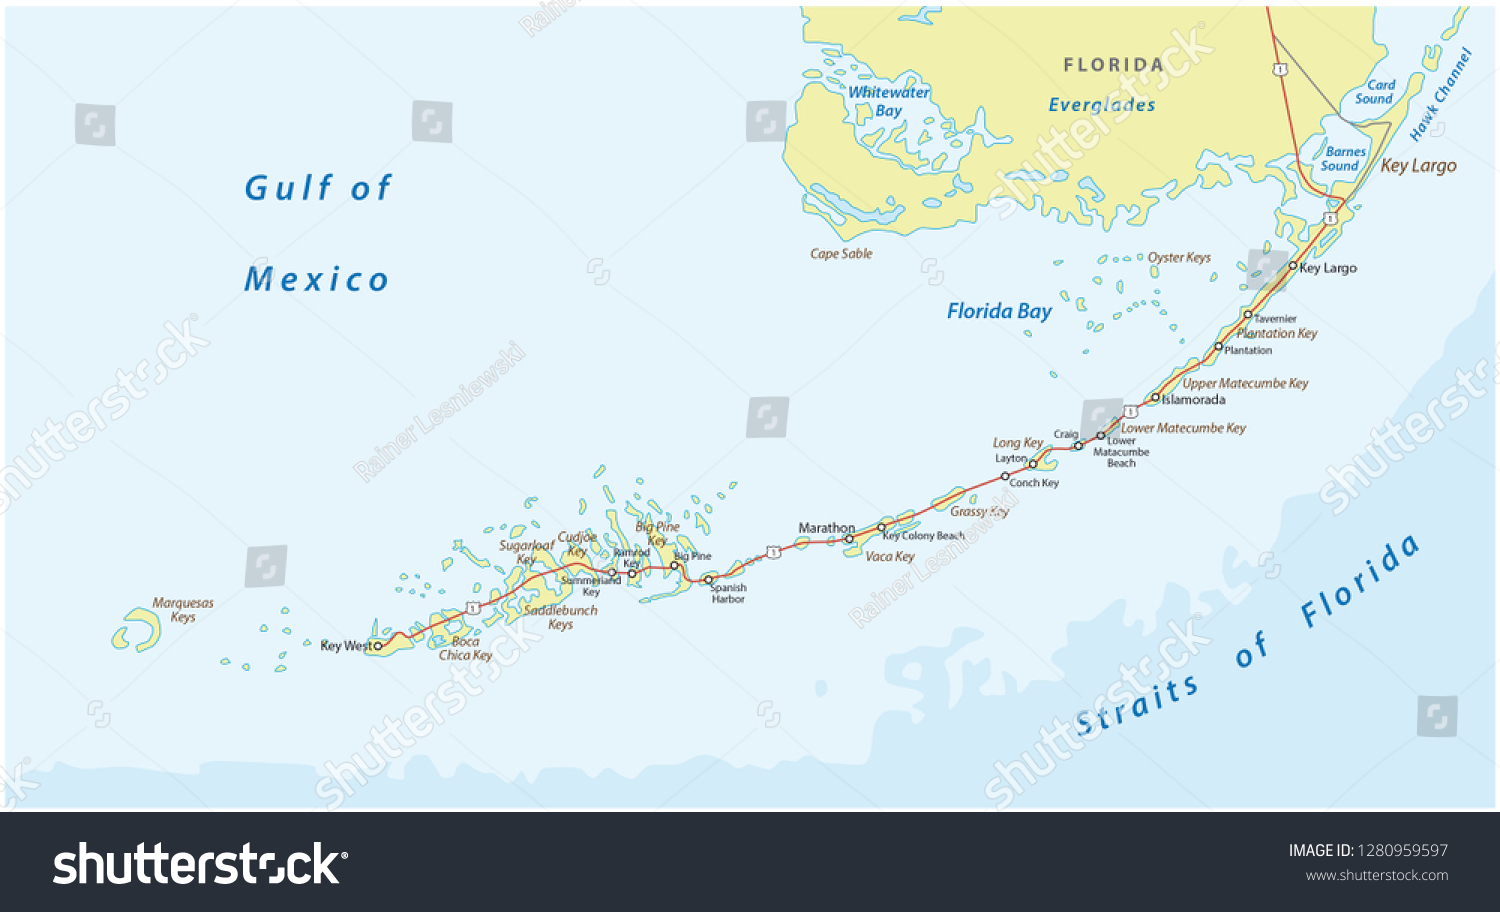 Florida Keys Map Stock Vectors Images Vector Art Shutterstock